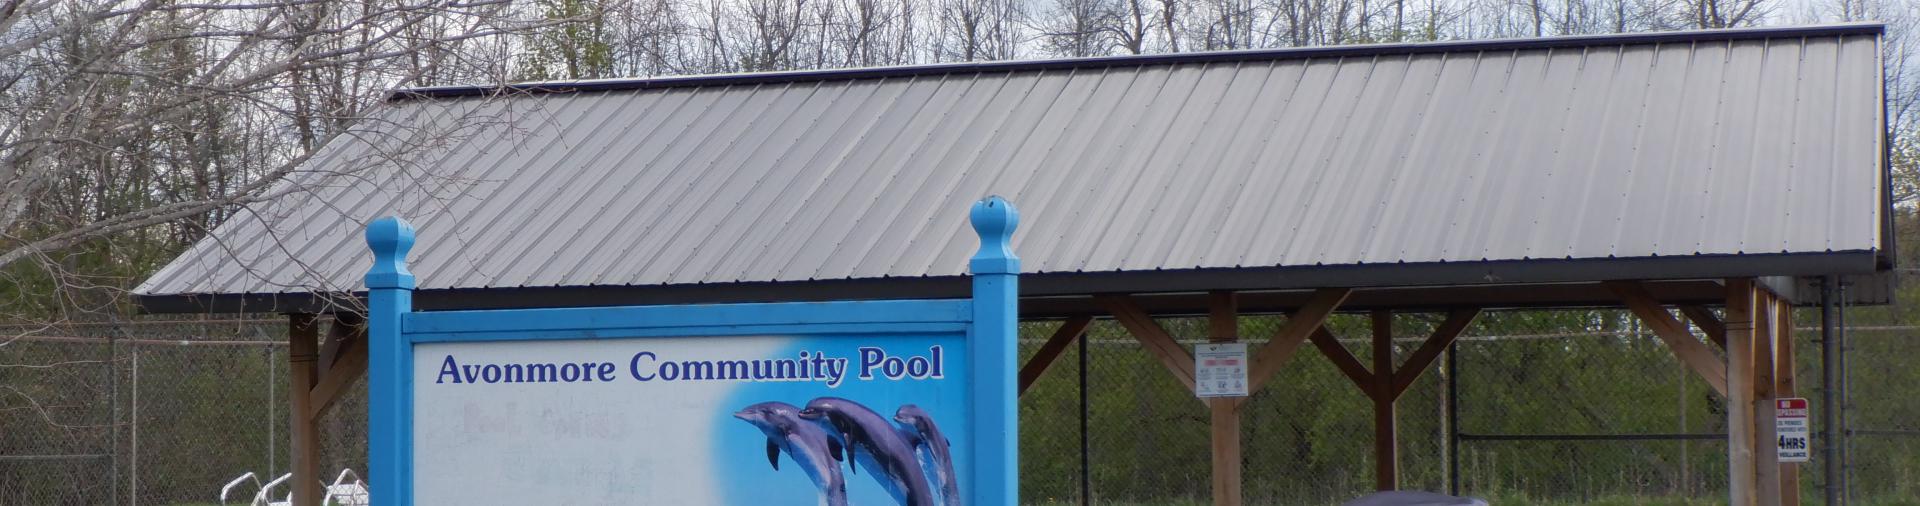 Avonmore Community Pool